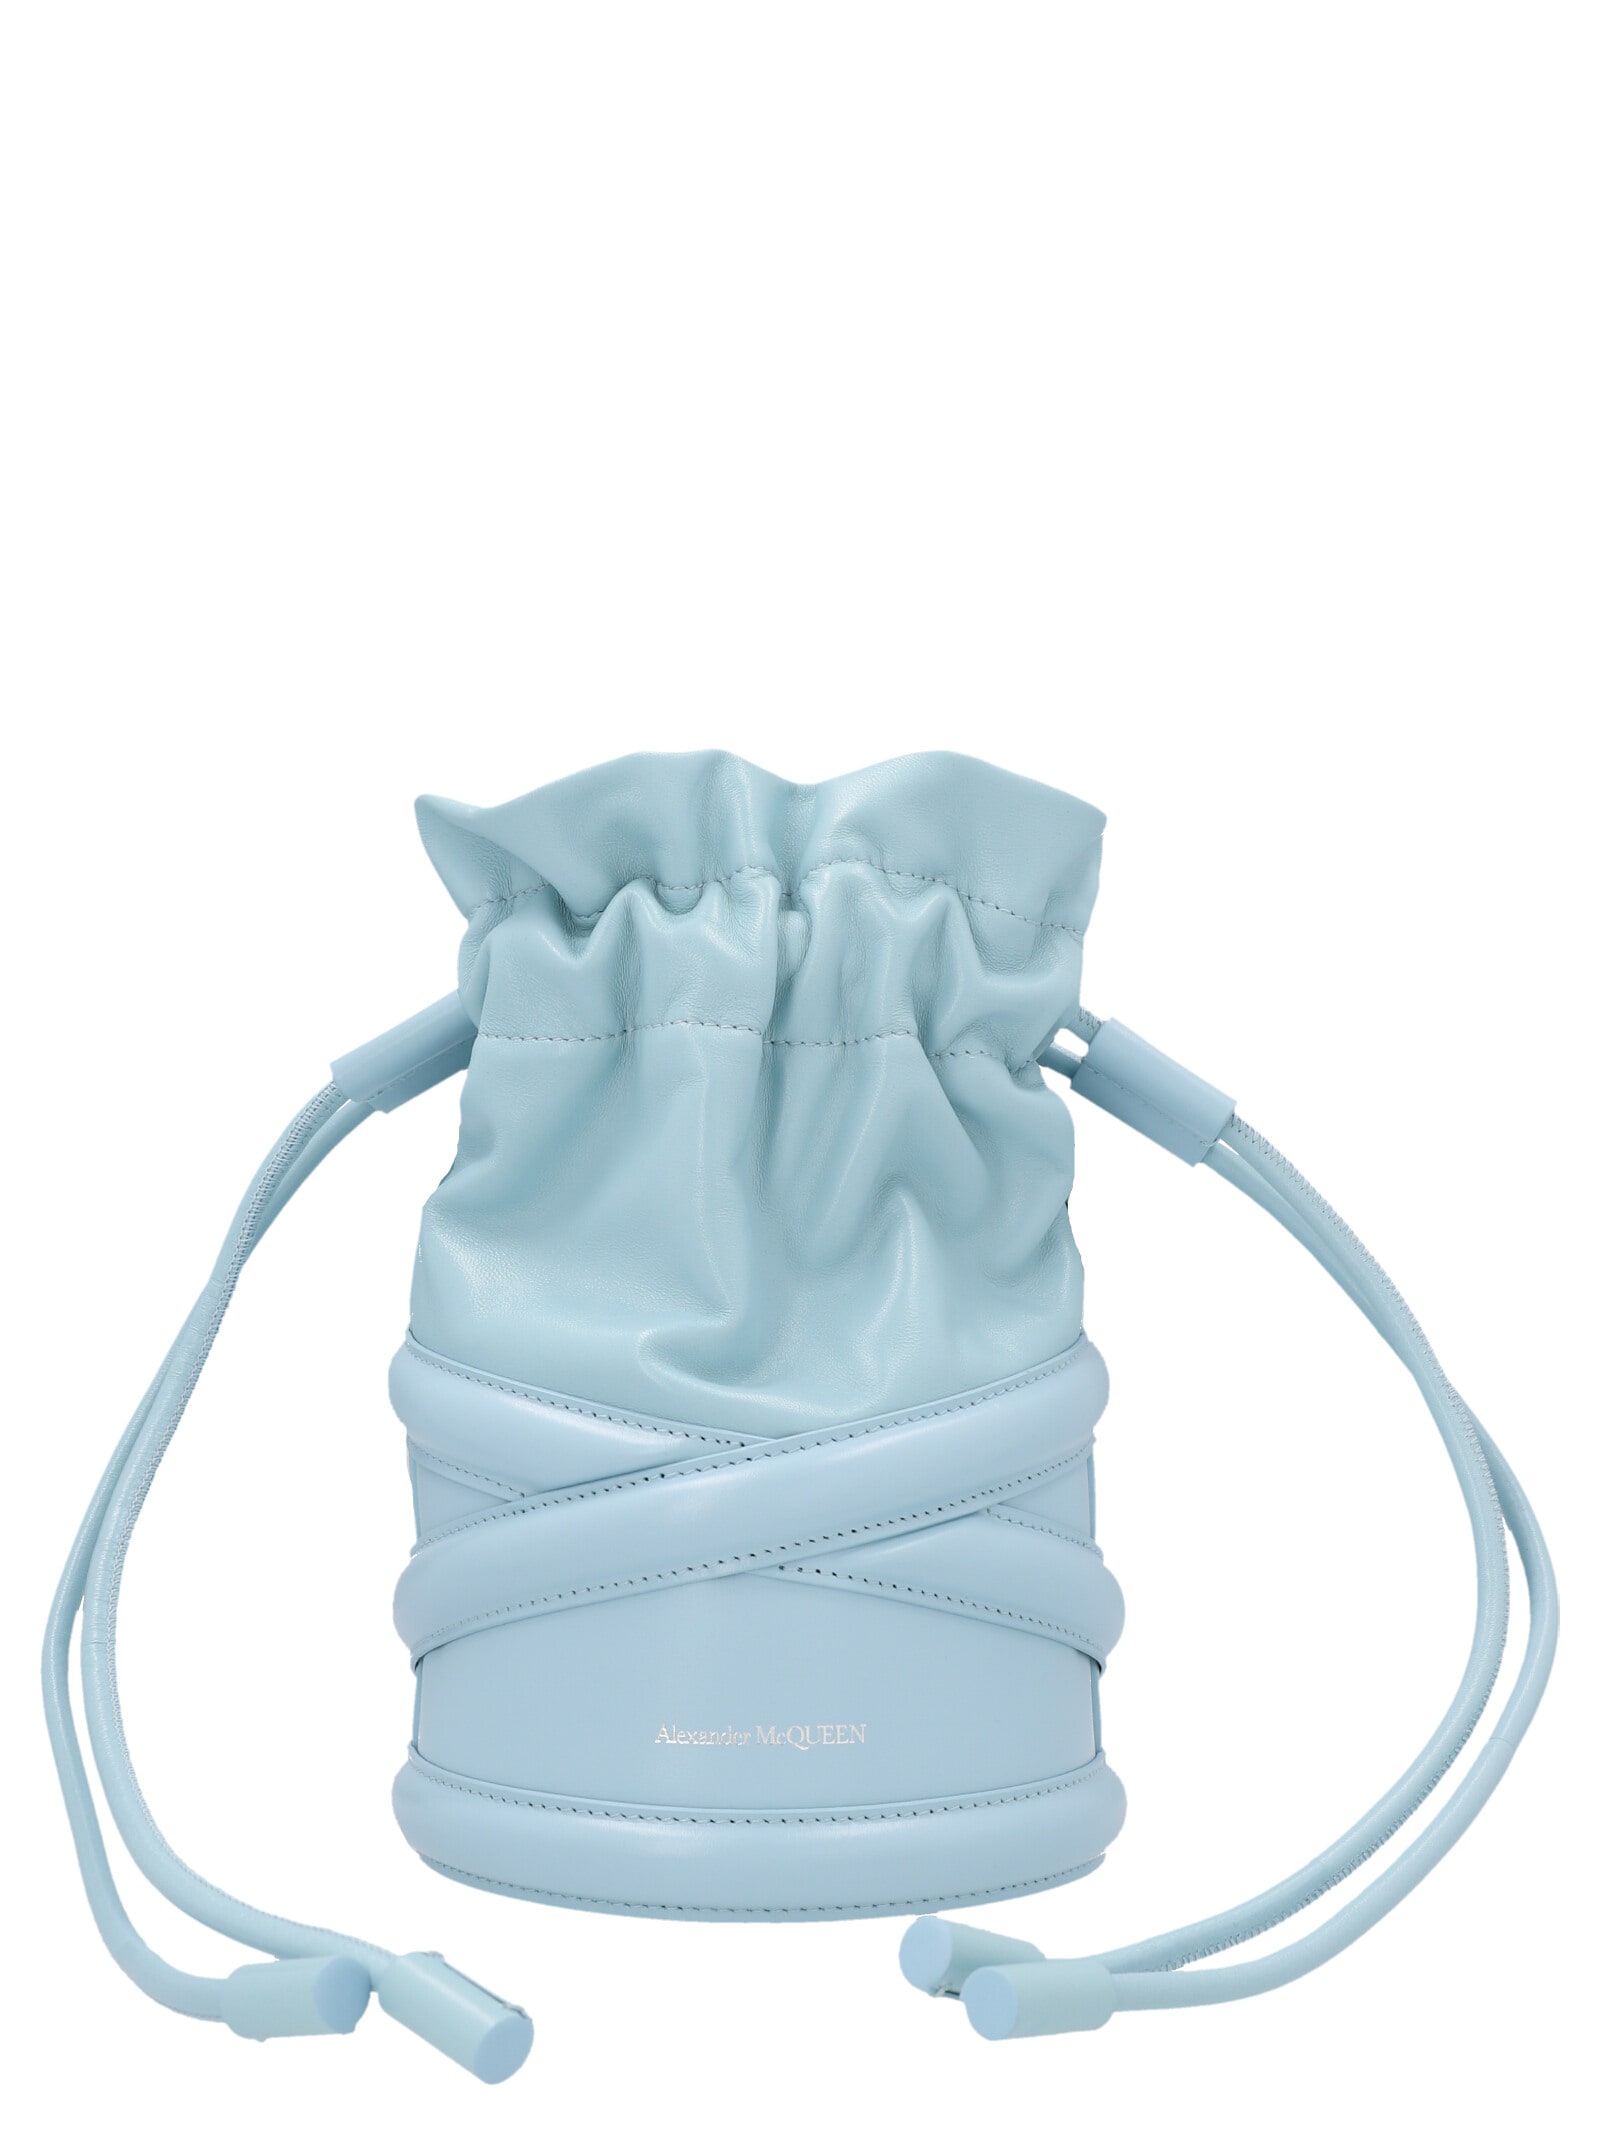 Alexander McQueen soft Curve Crossbody Bag